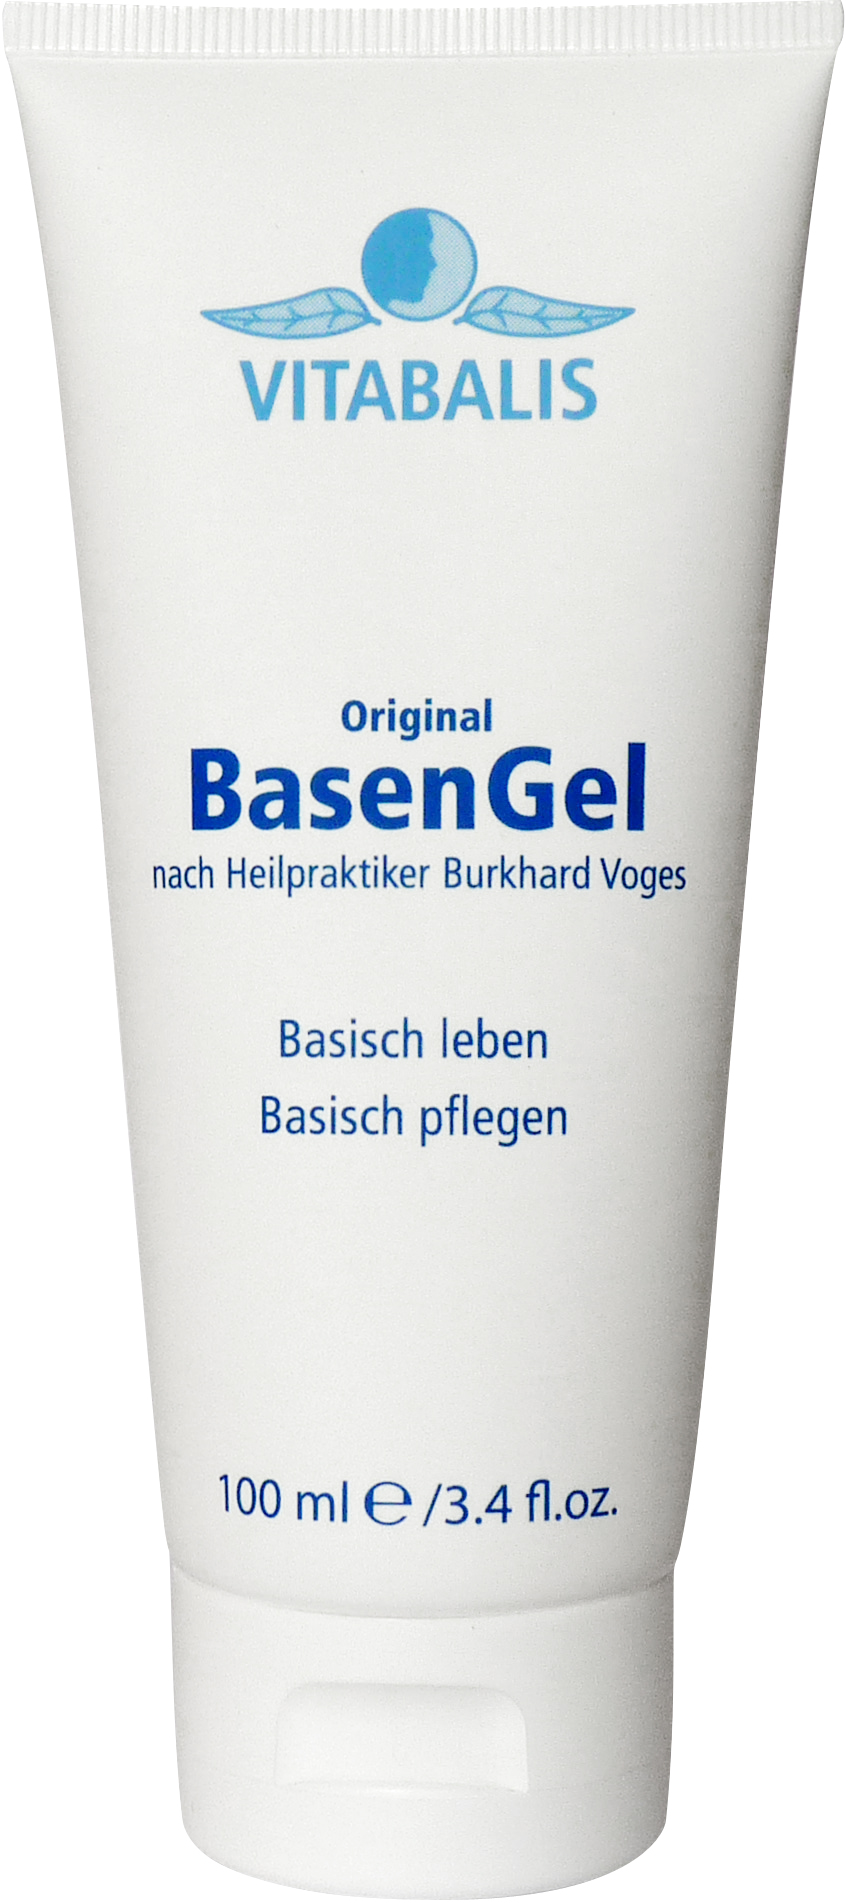 BasenGel Original, 100ml